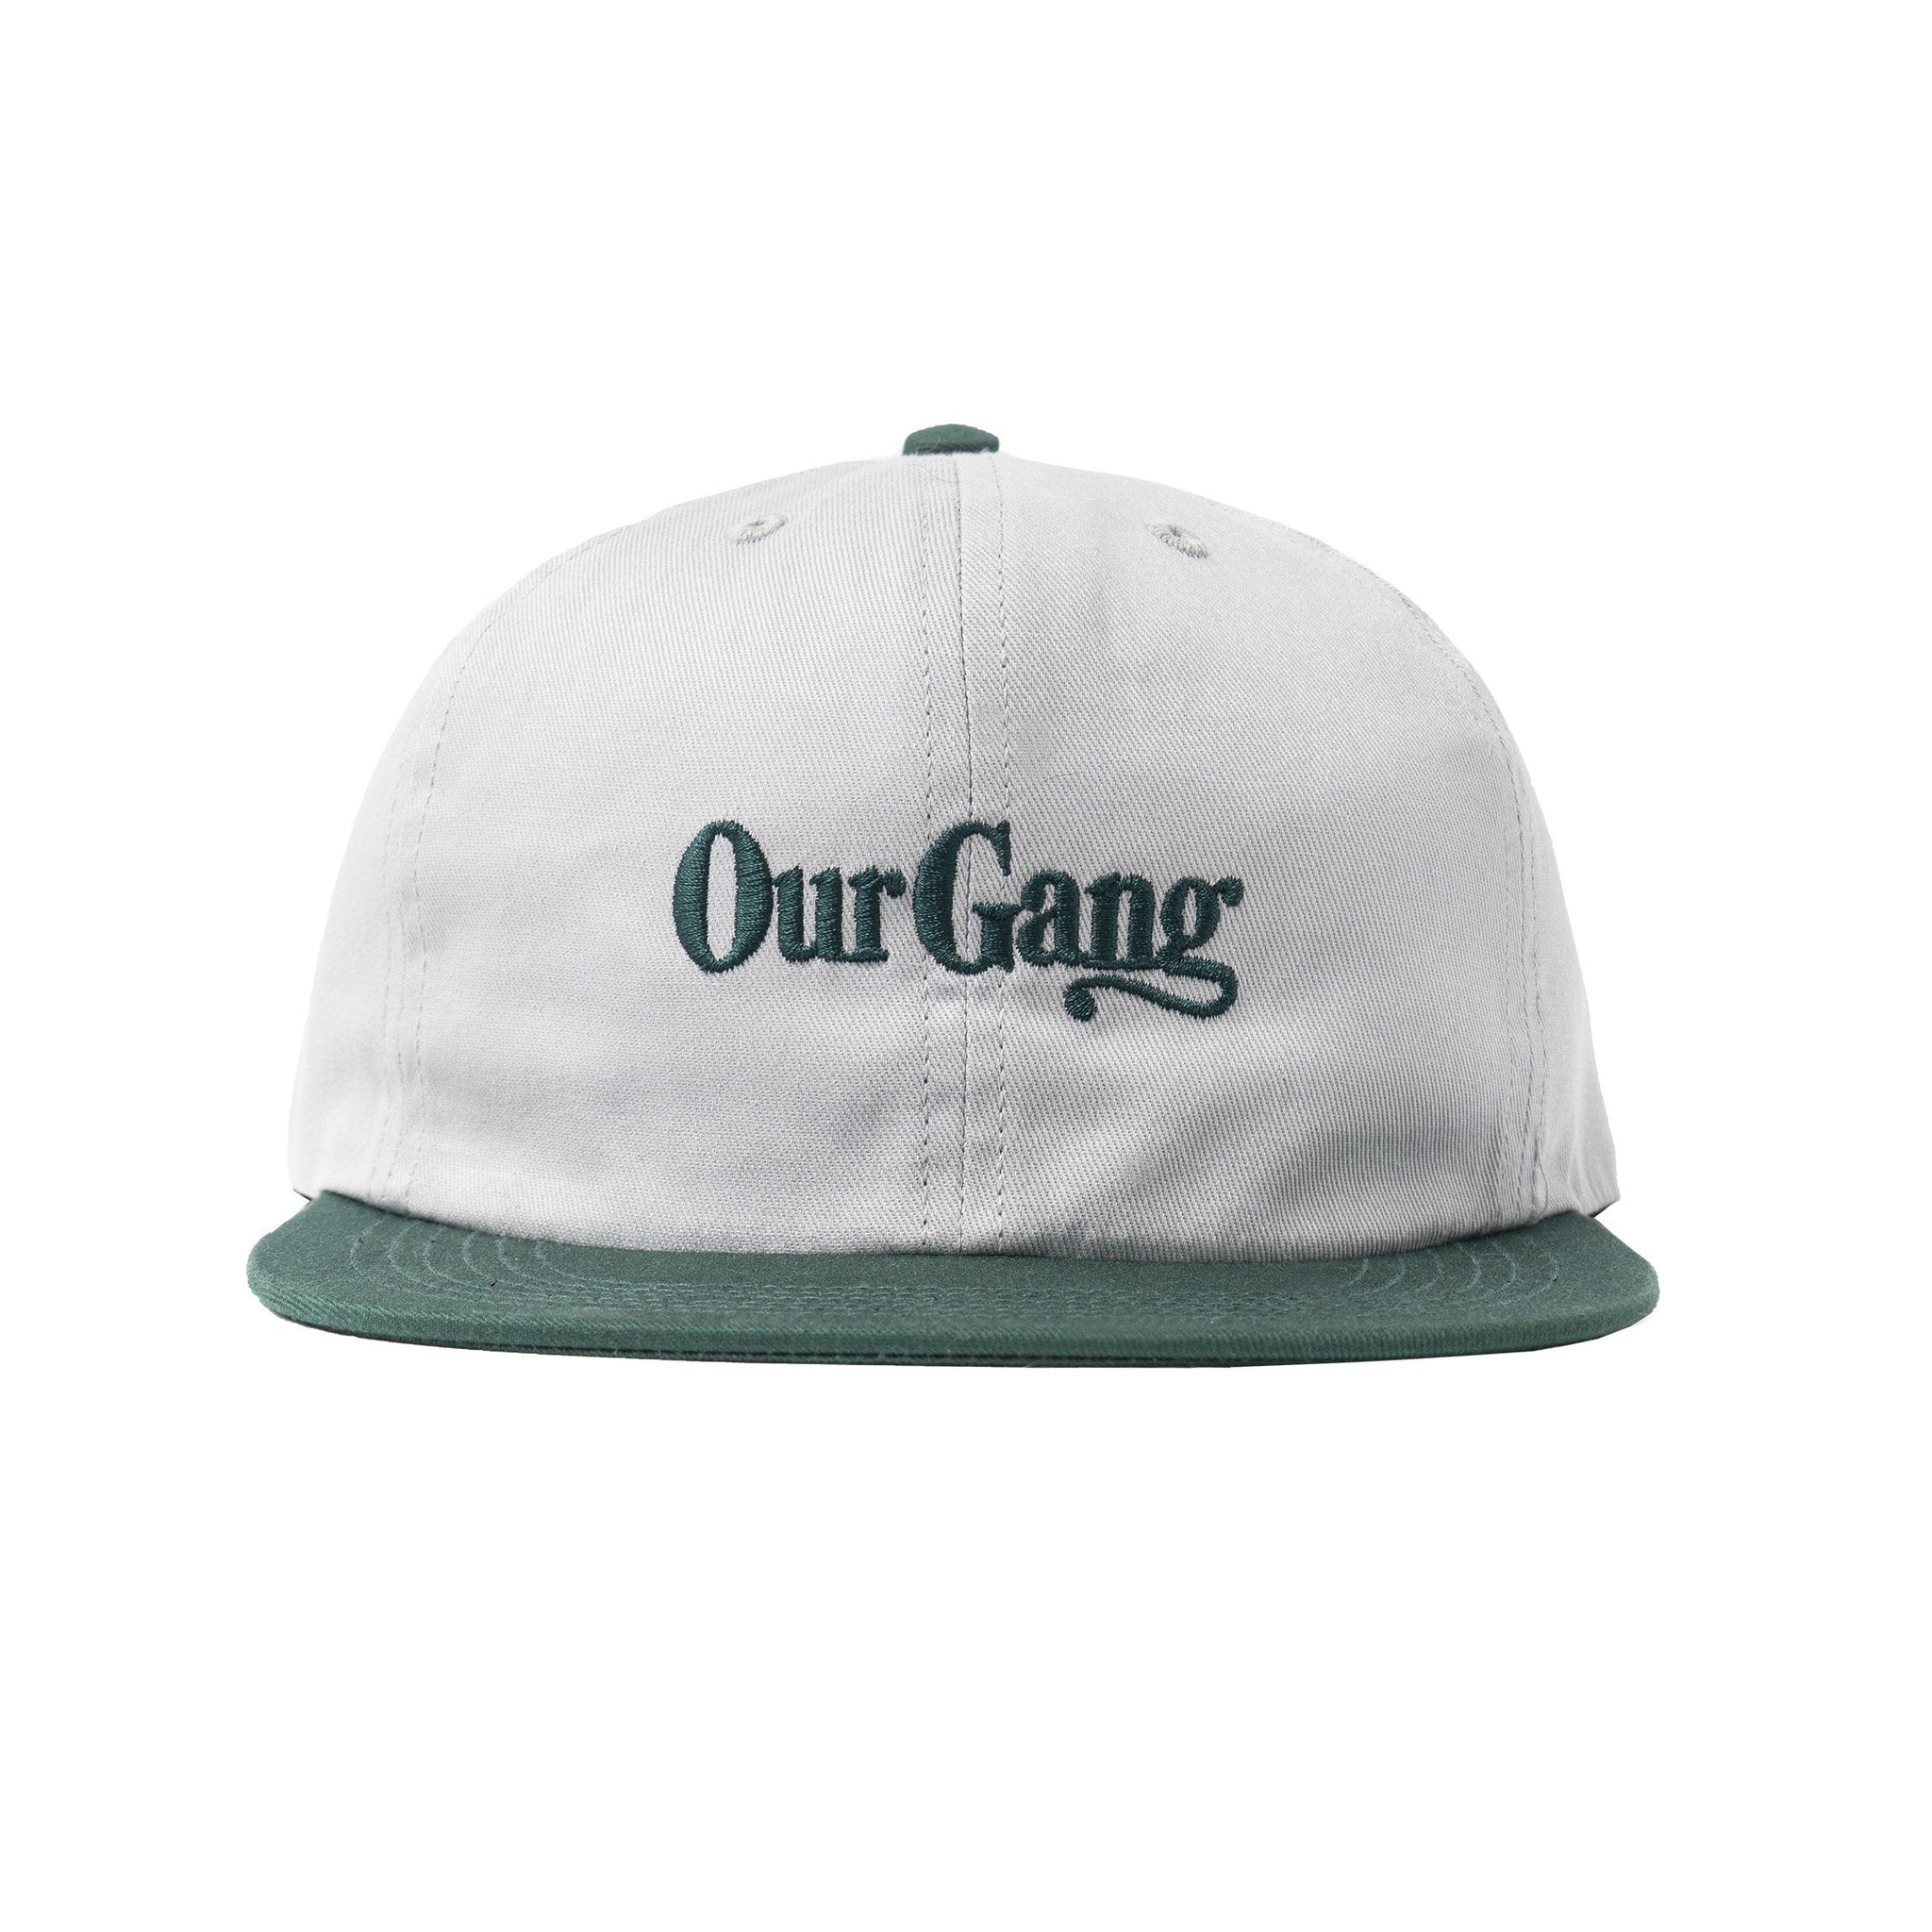 OUR GANG CAP - Grey/Green